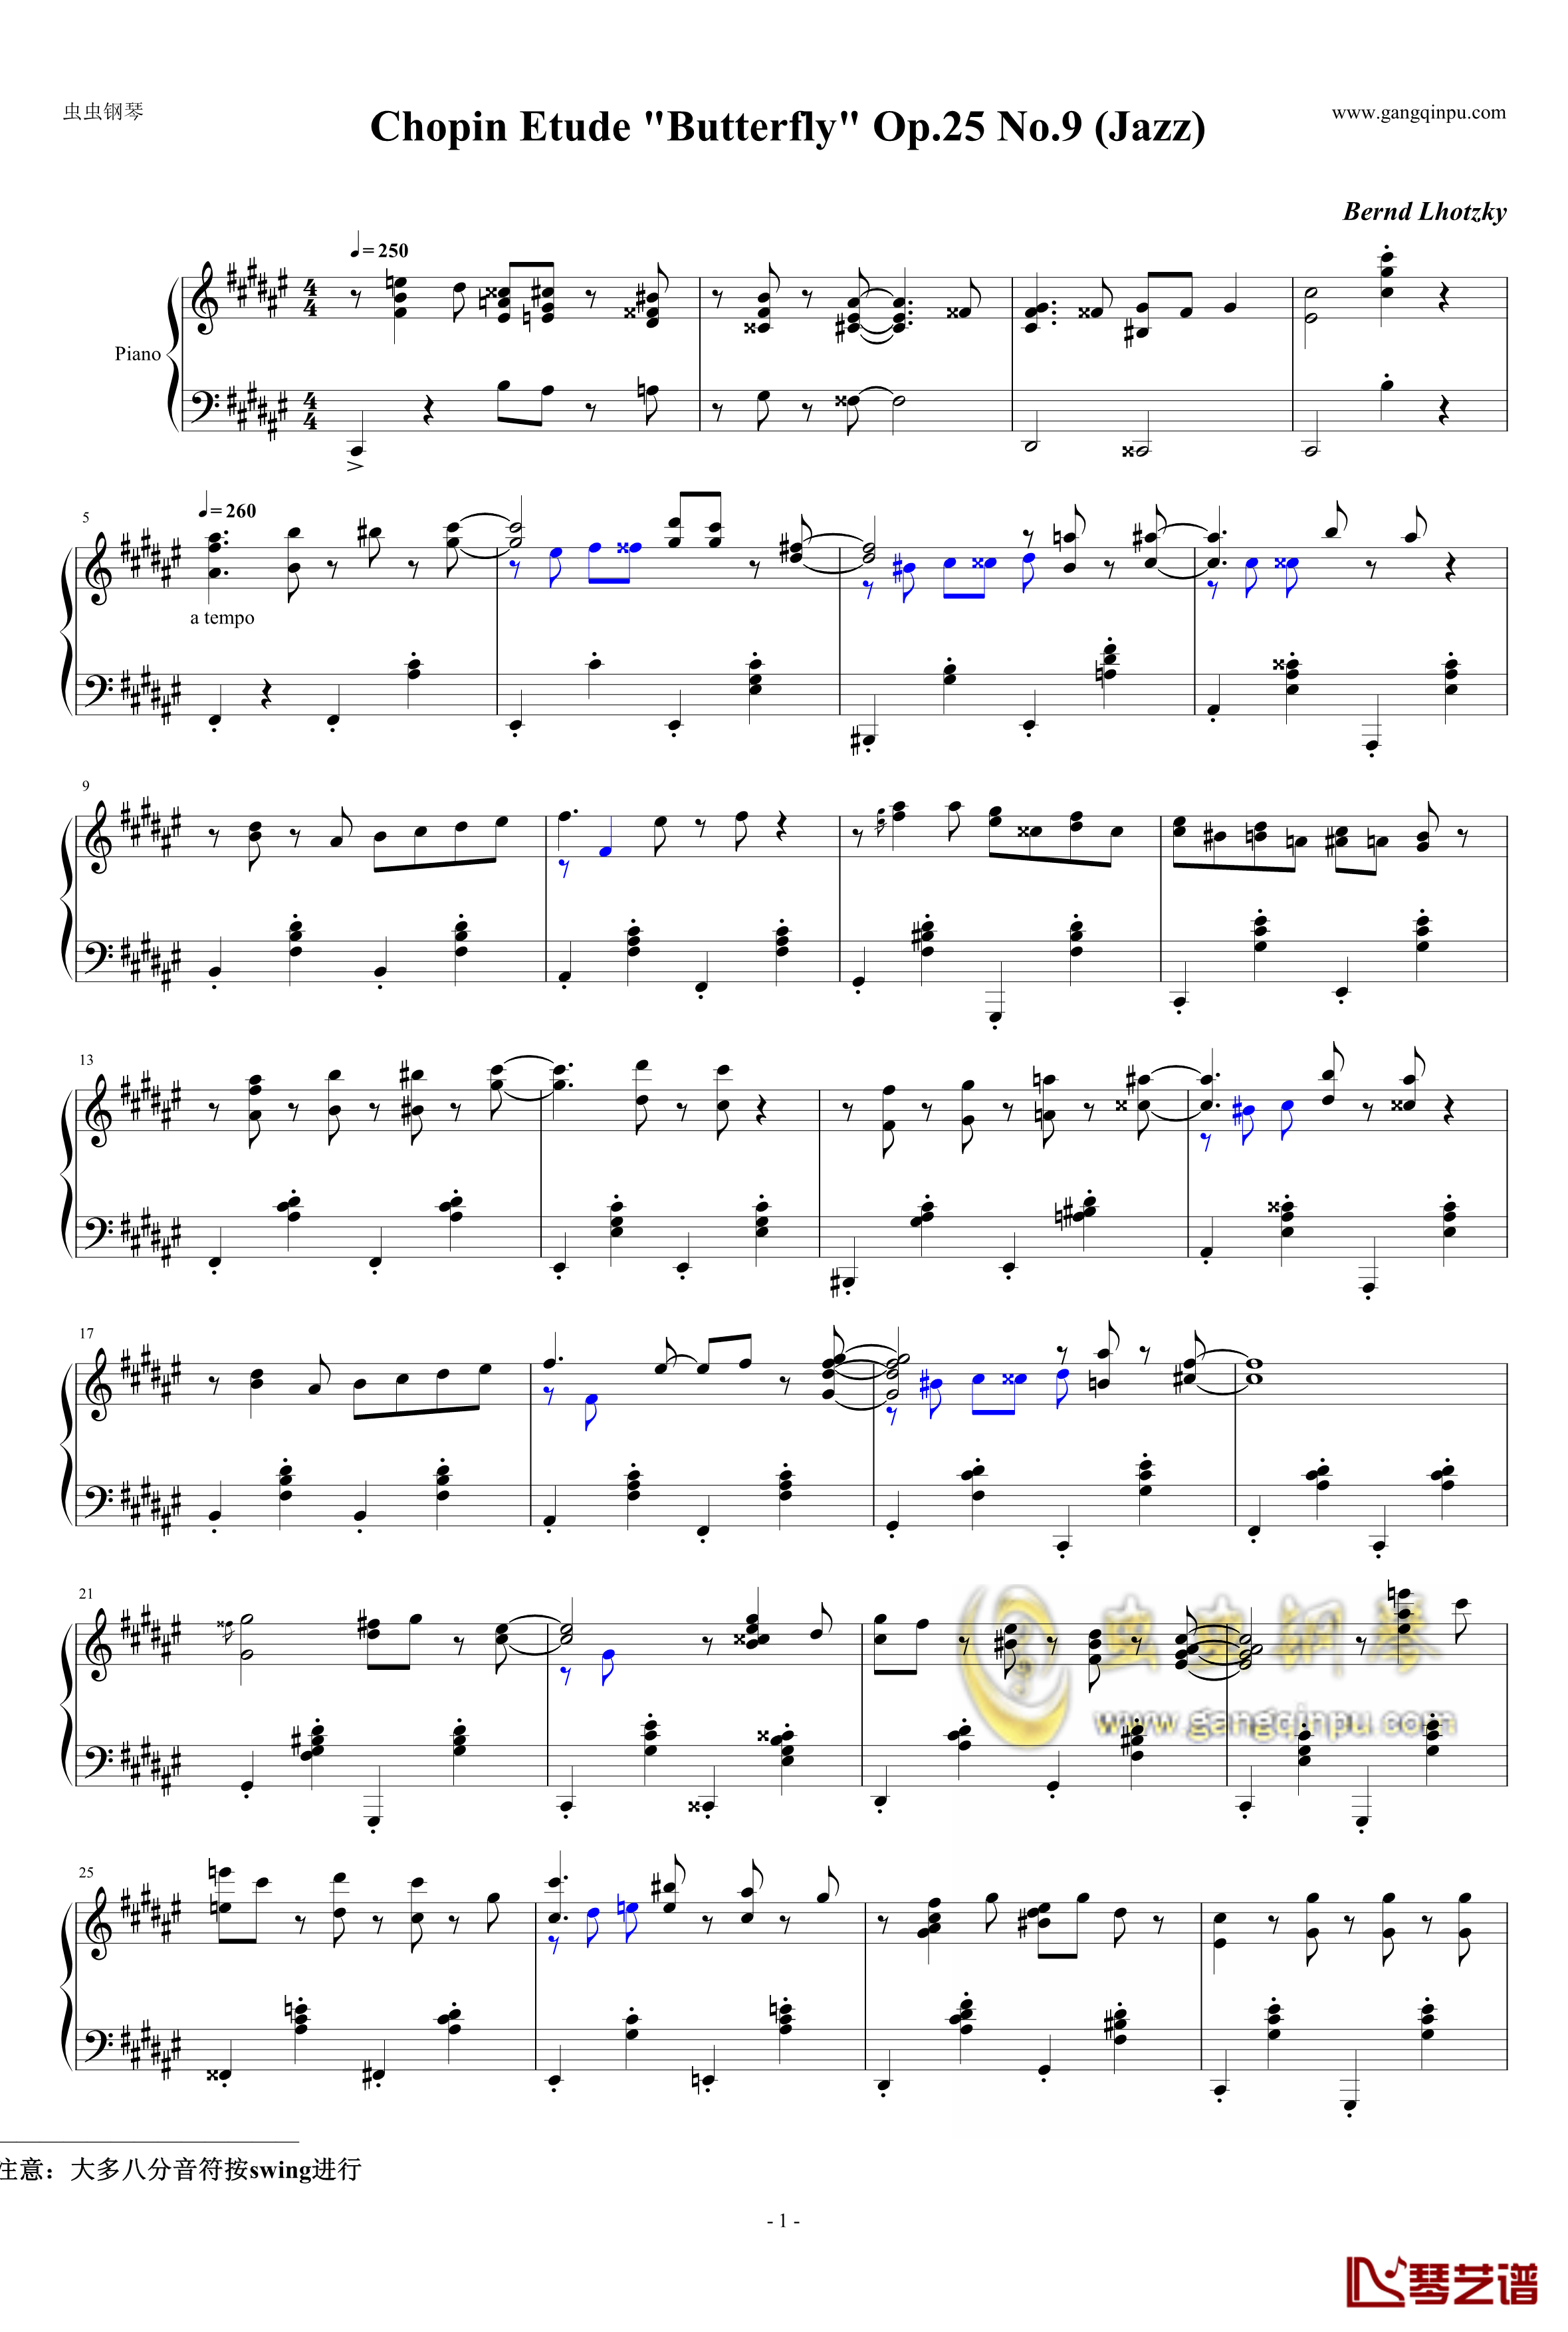 Jazz Chopin Etude Op.25 No.9钢琴谱-独奏-Bernd Lhotzky1